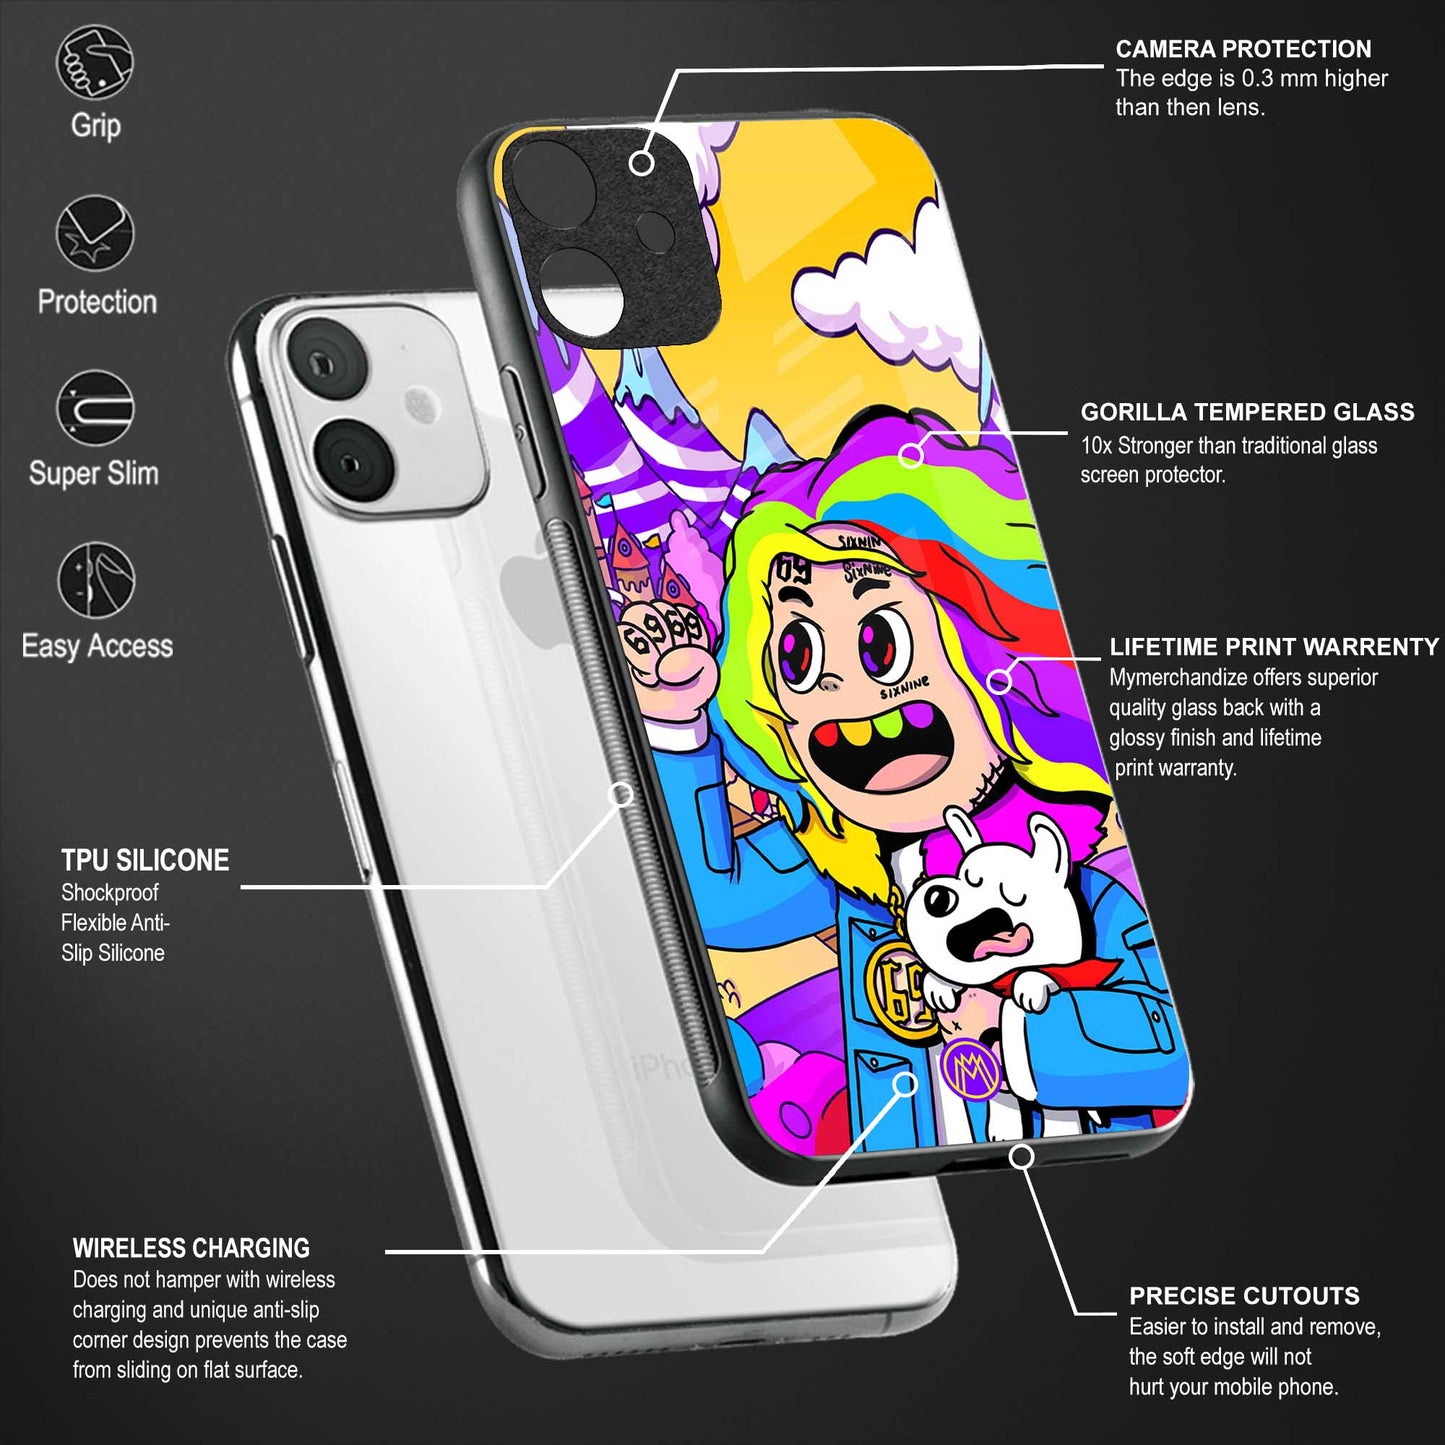 tekashi 6ix9ine back phone cover | glass case for google pixel 6a